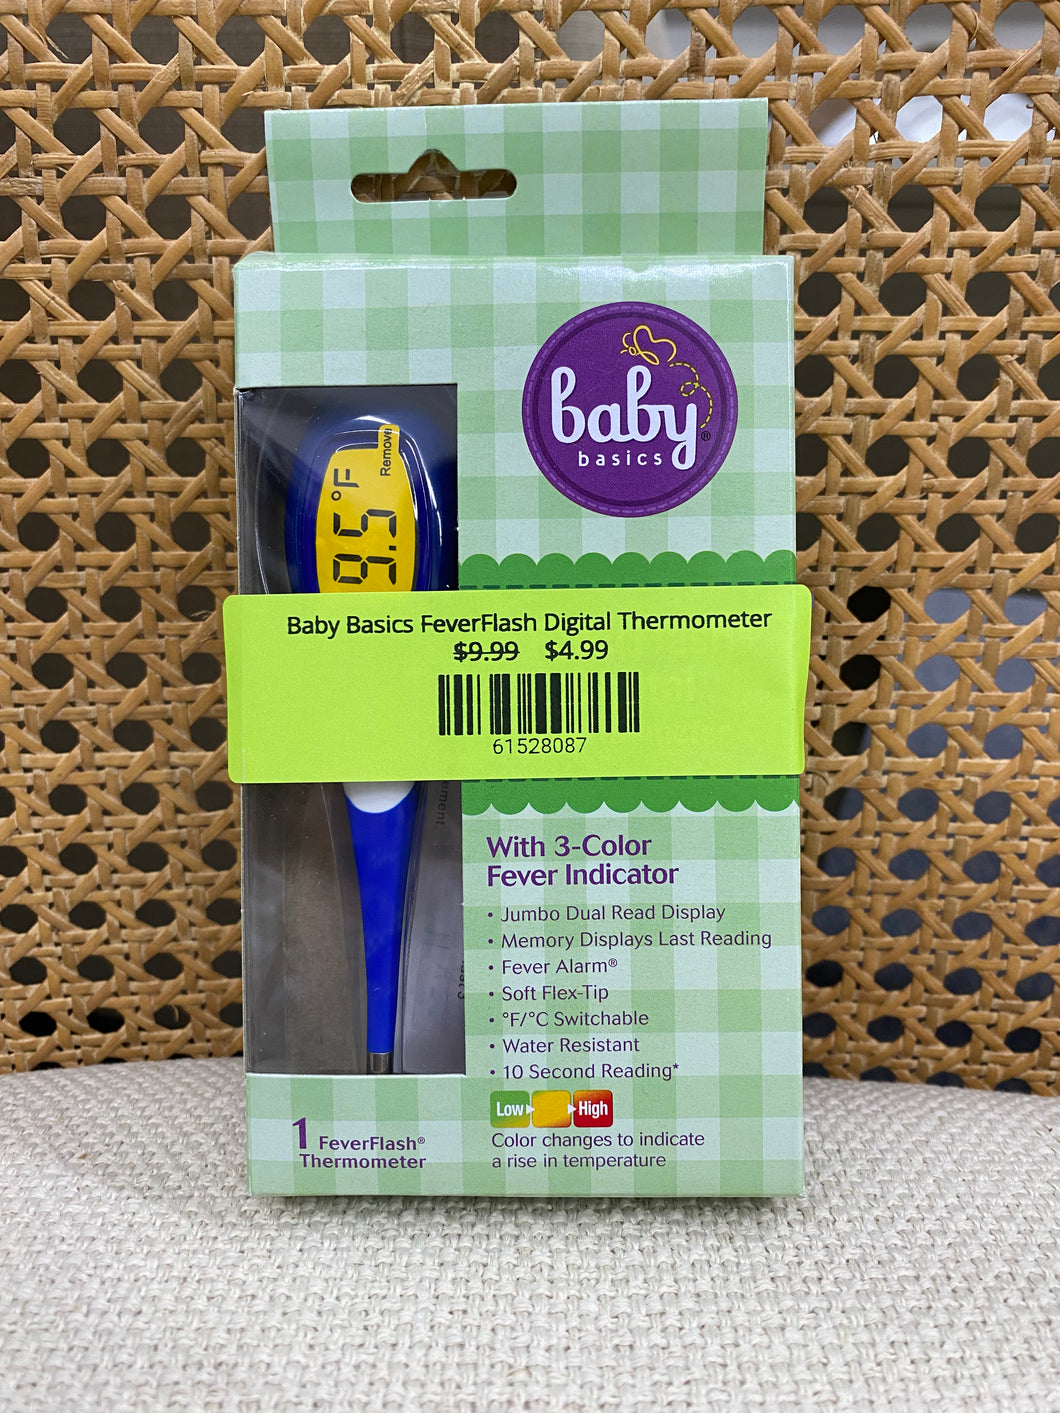 Baby Basics FeverFlash Digital Thermometer